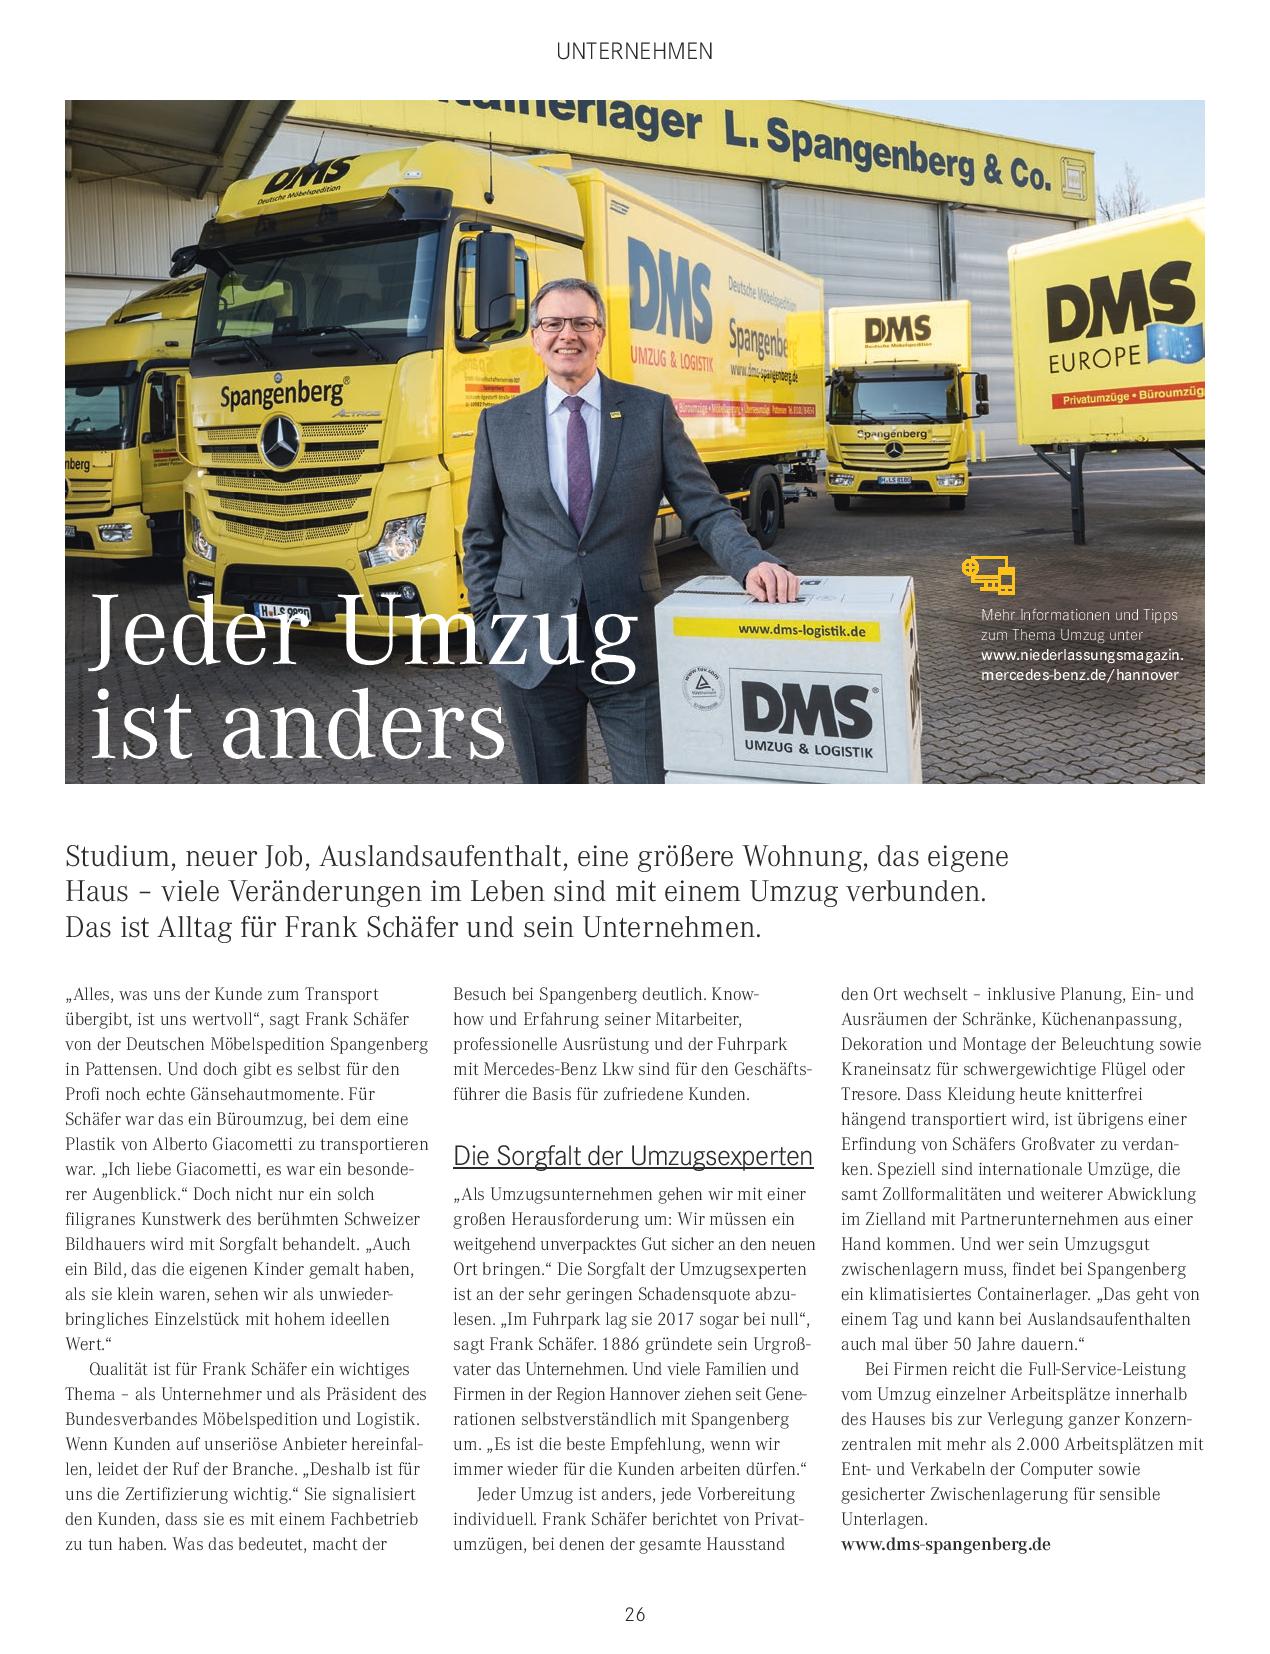 Umzugsunternehmen DMS Spangenberg bei Mercedes-Benz Niederlassungsmagazin